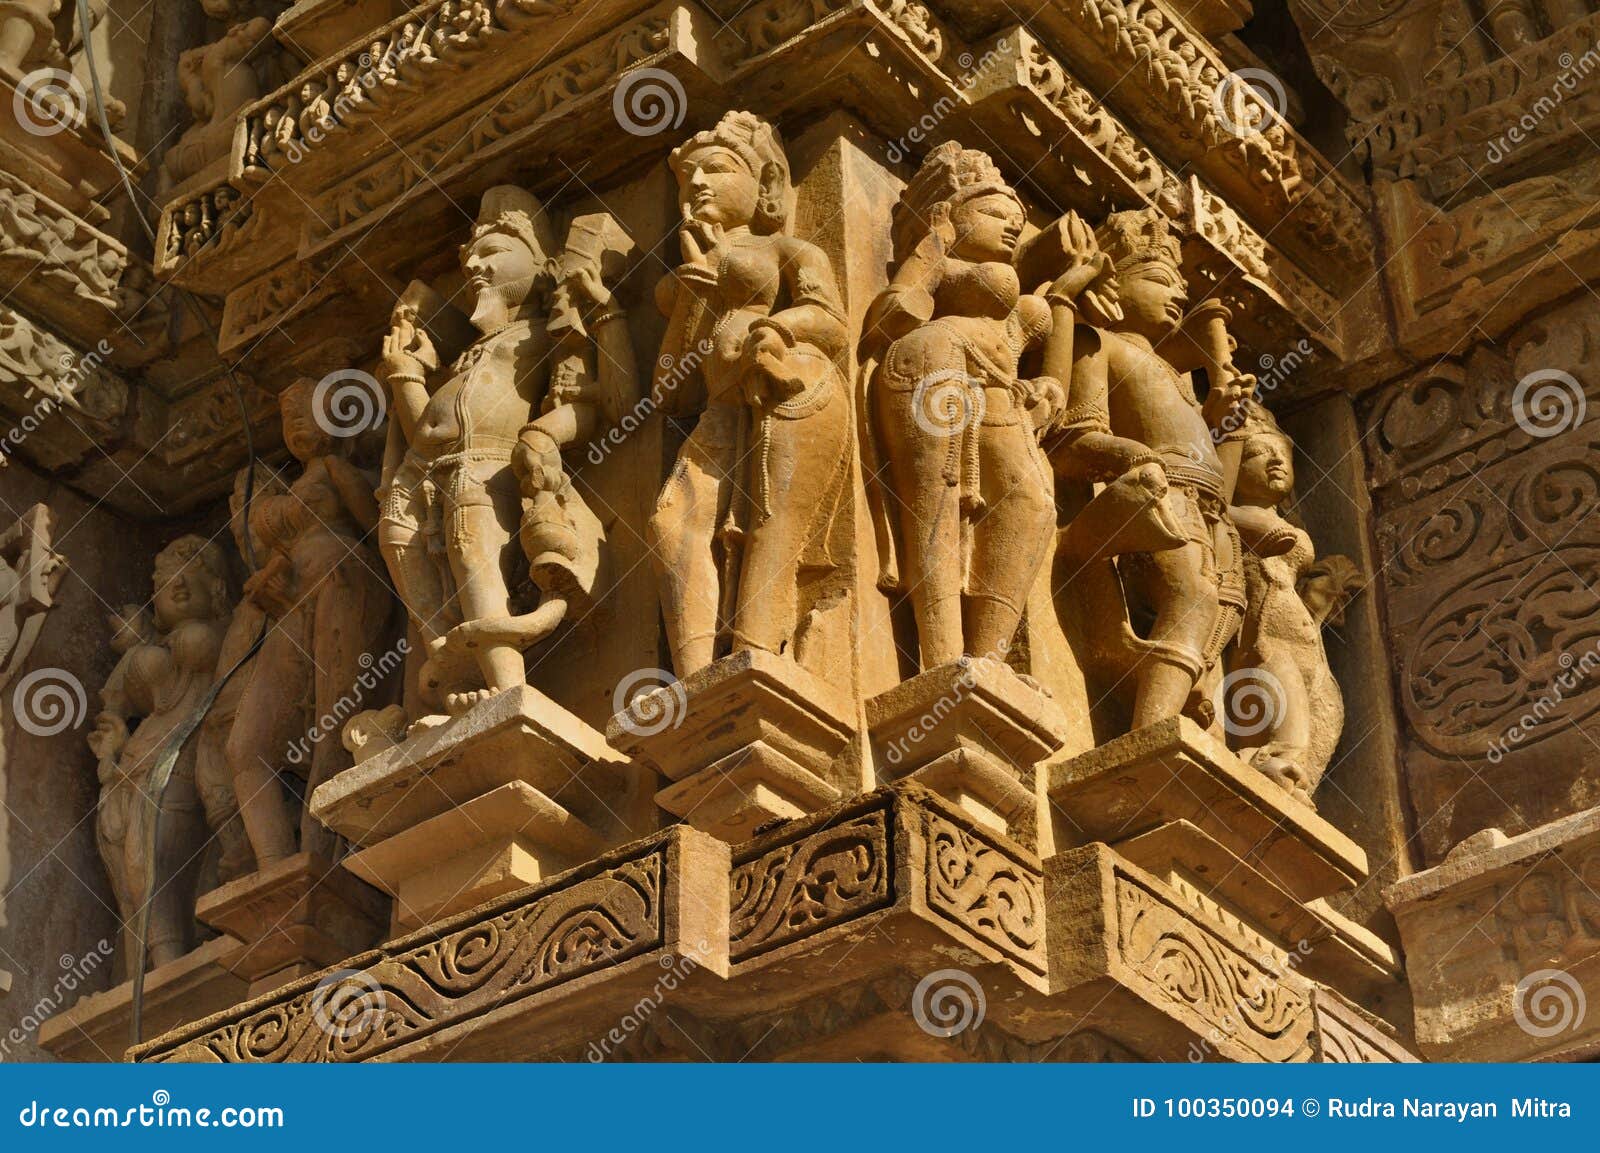 erotic human sculptures at vishvanatha temple, western temples o